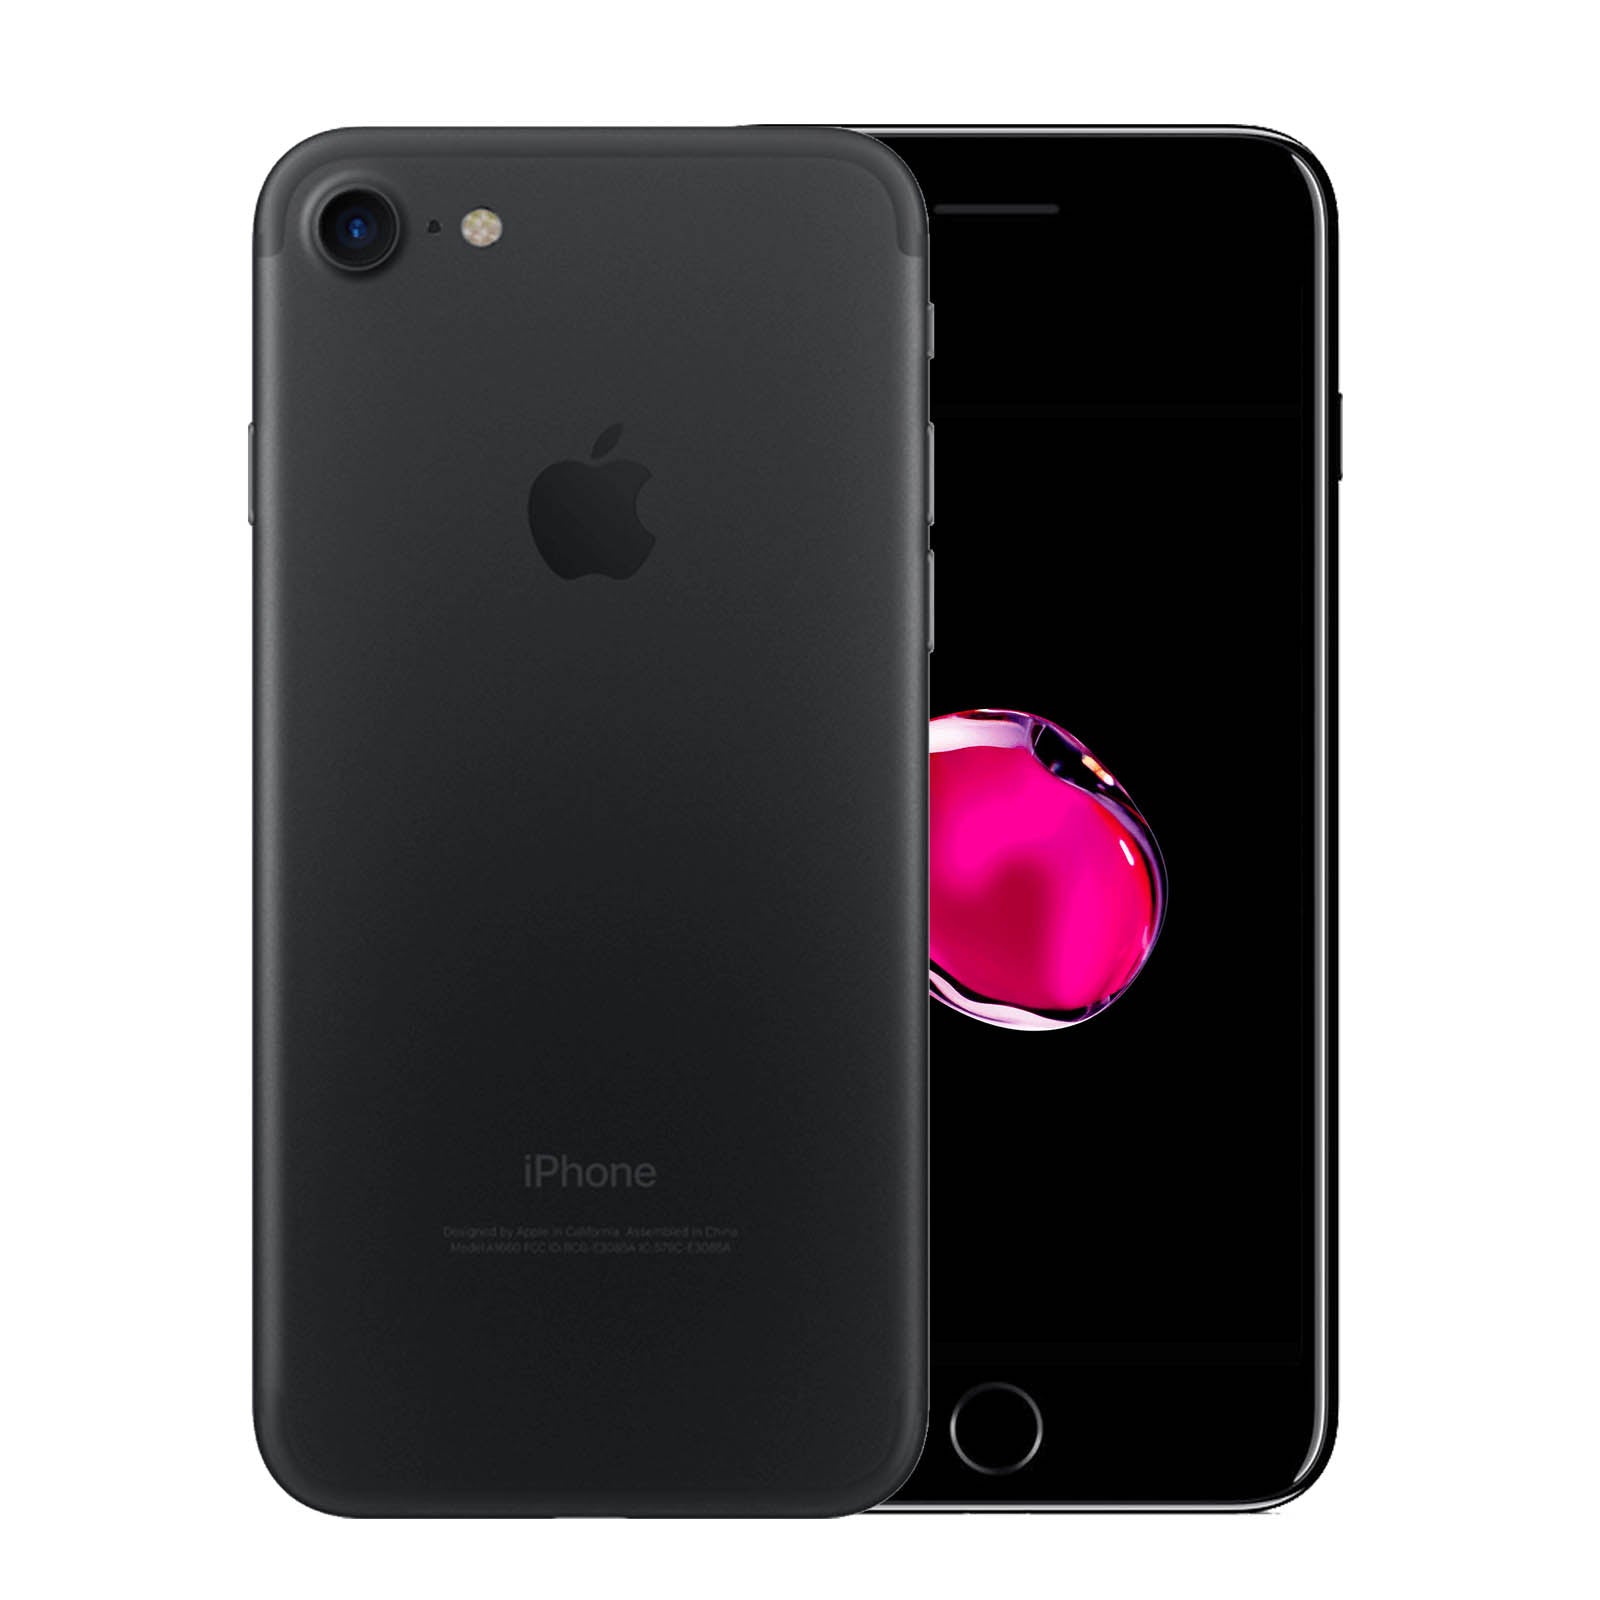 Apple iPhone 7 32GB Black Pristine - Unlocked